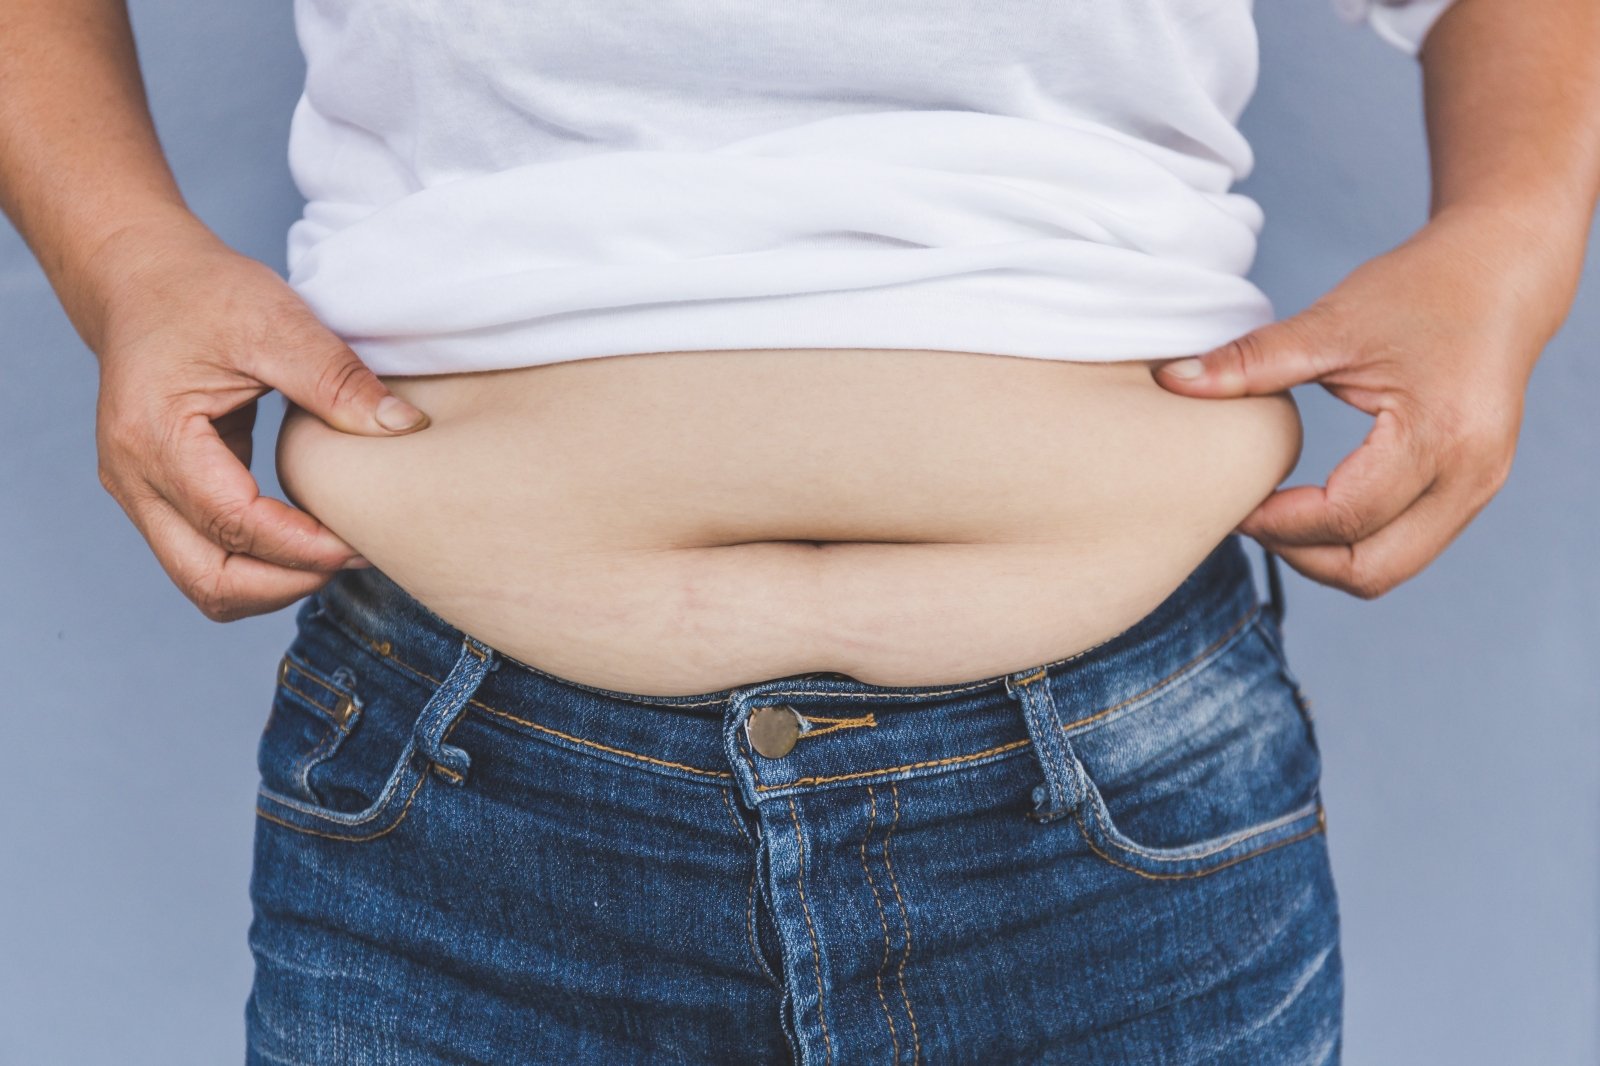 Forskning har vist at overvekt også kan være skyld i hygienevanene dine